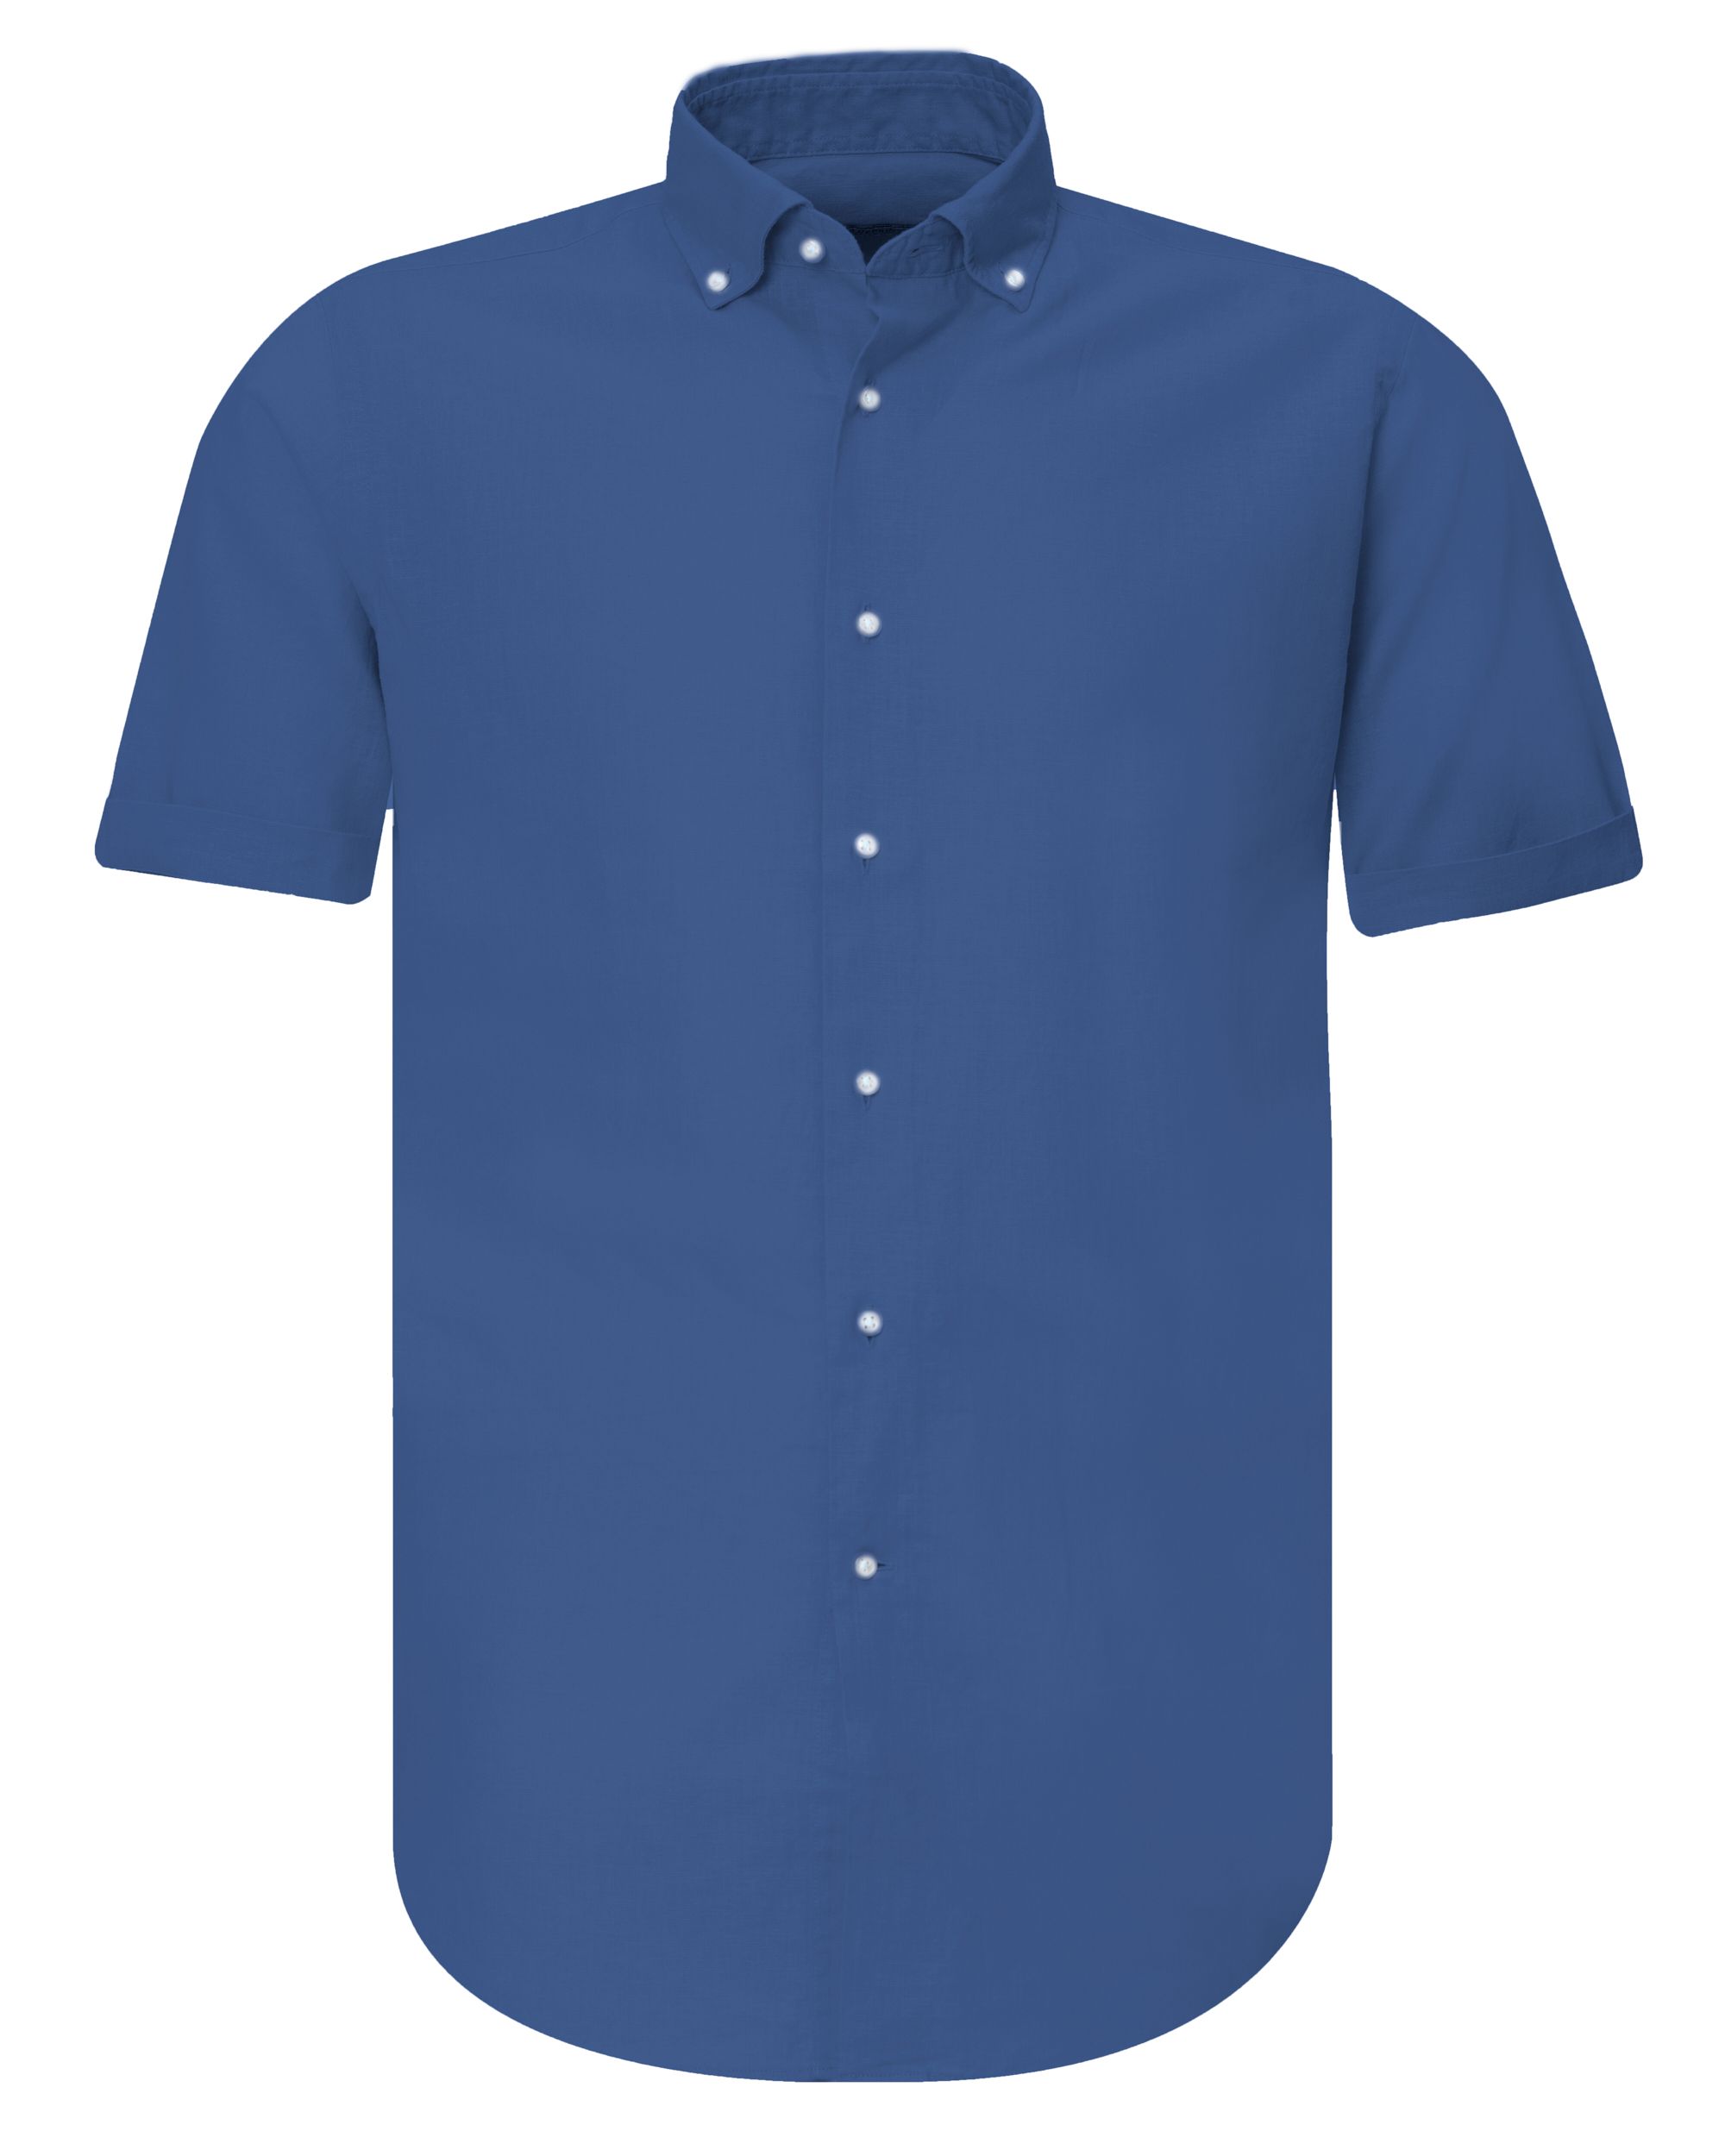 The BLUEPRINT Premium Casual Overhemd KM Middenblauw uni 077930-007-L